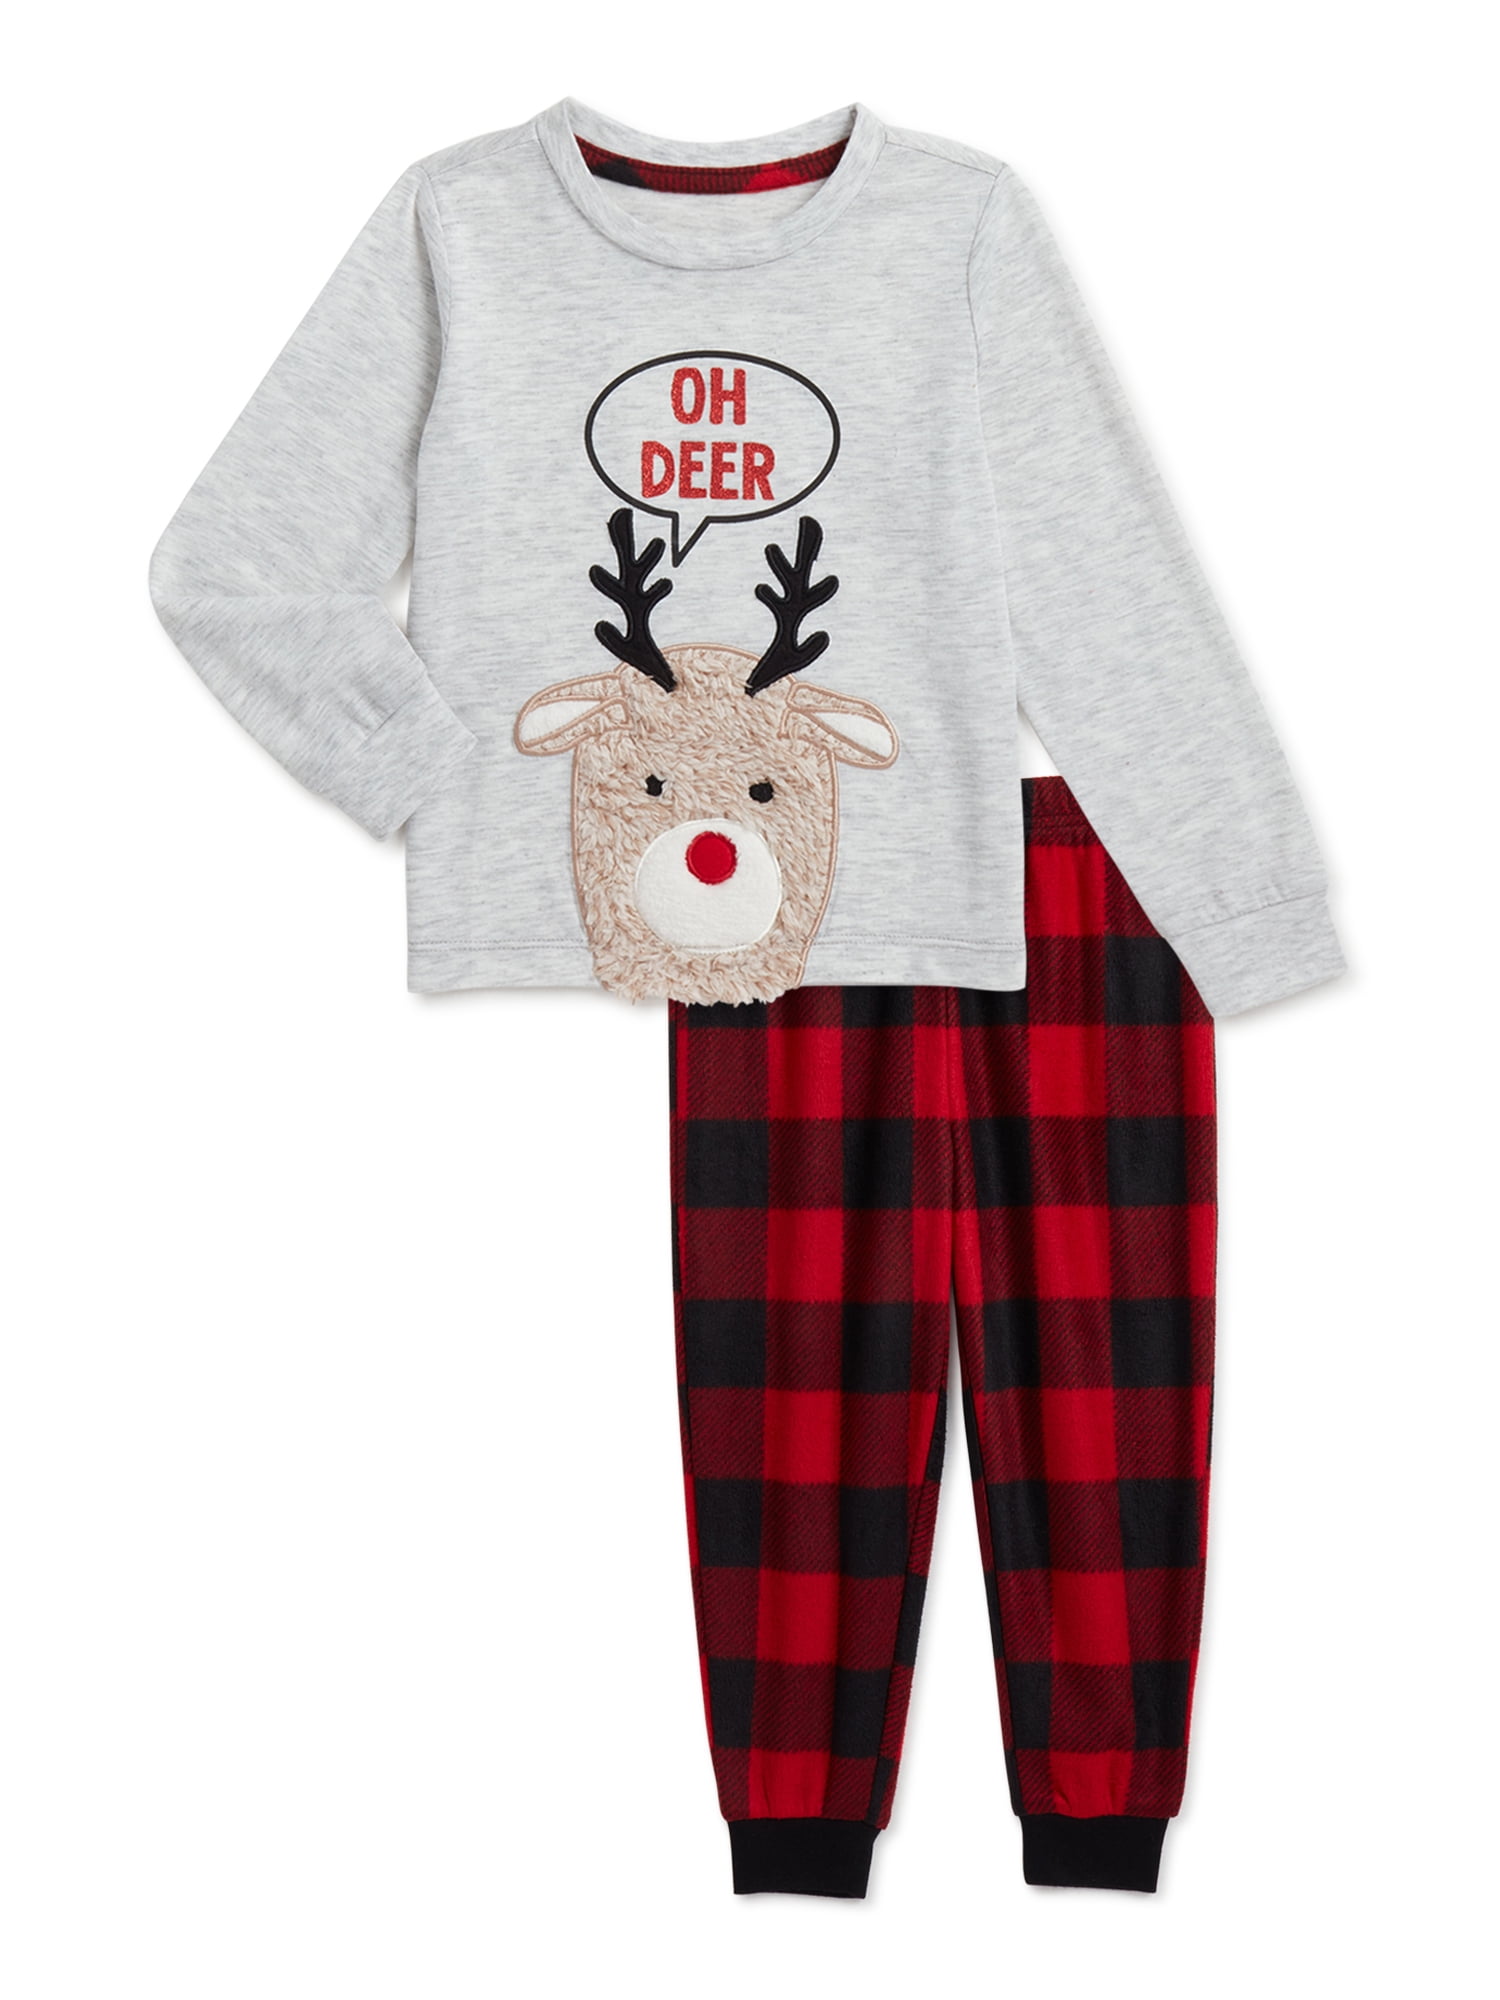 Baby Toddler Boys Girls Matching Christmas Pjs 2-Piece Style Pajama Set T-Shirt Pants Sleepwear Sets